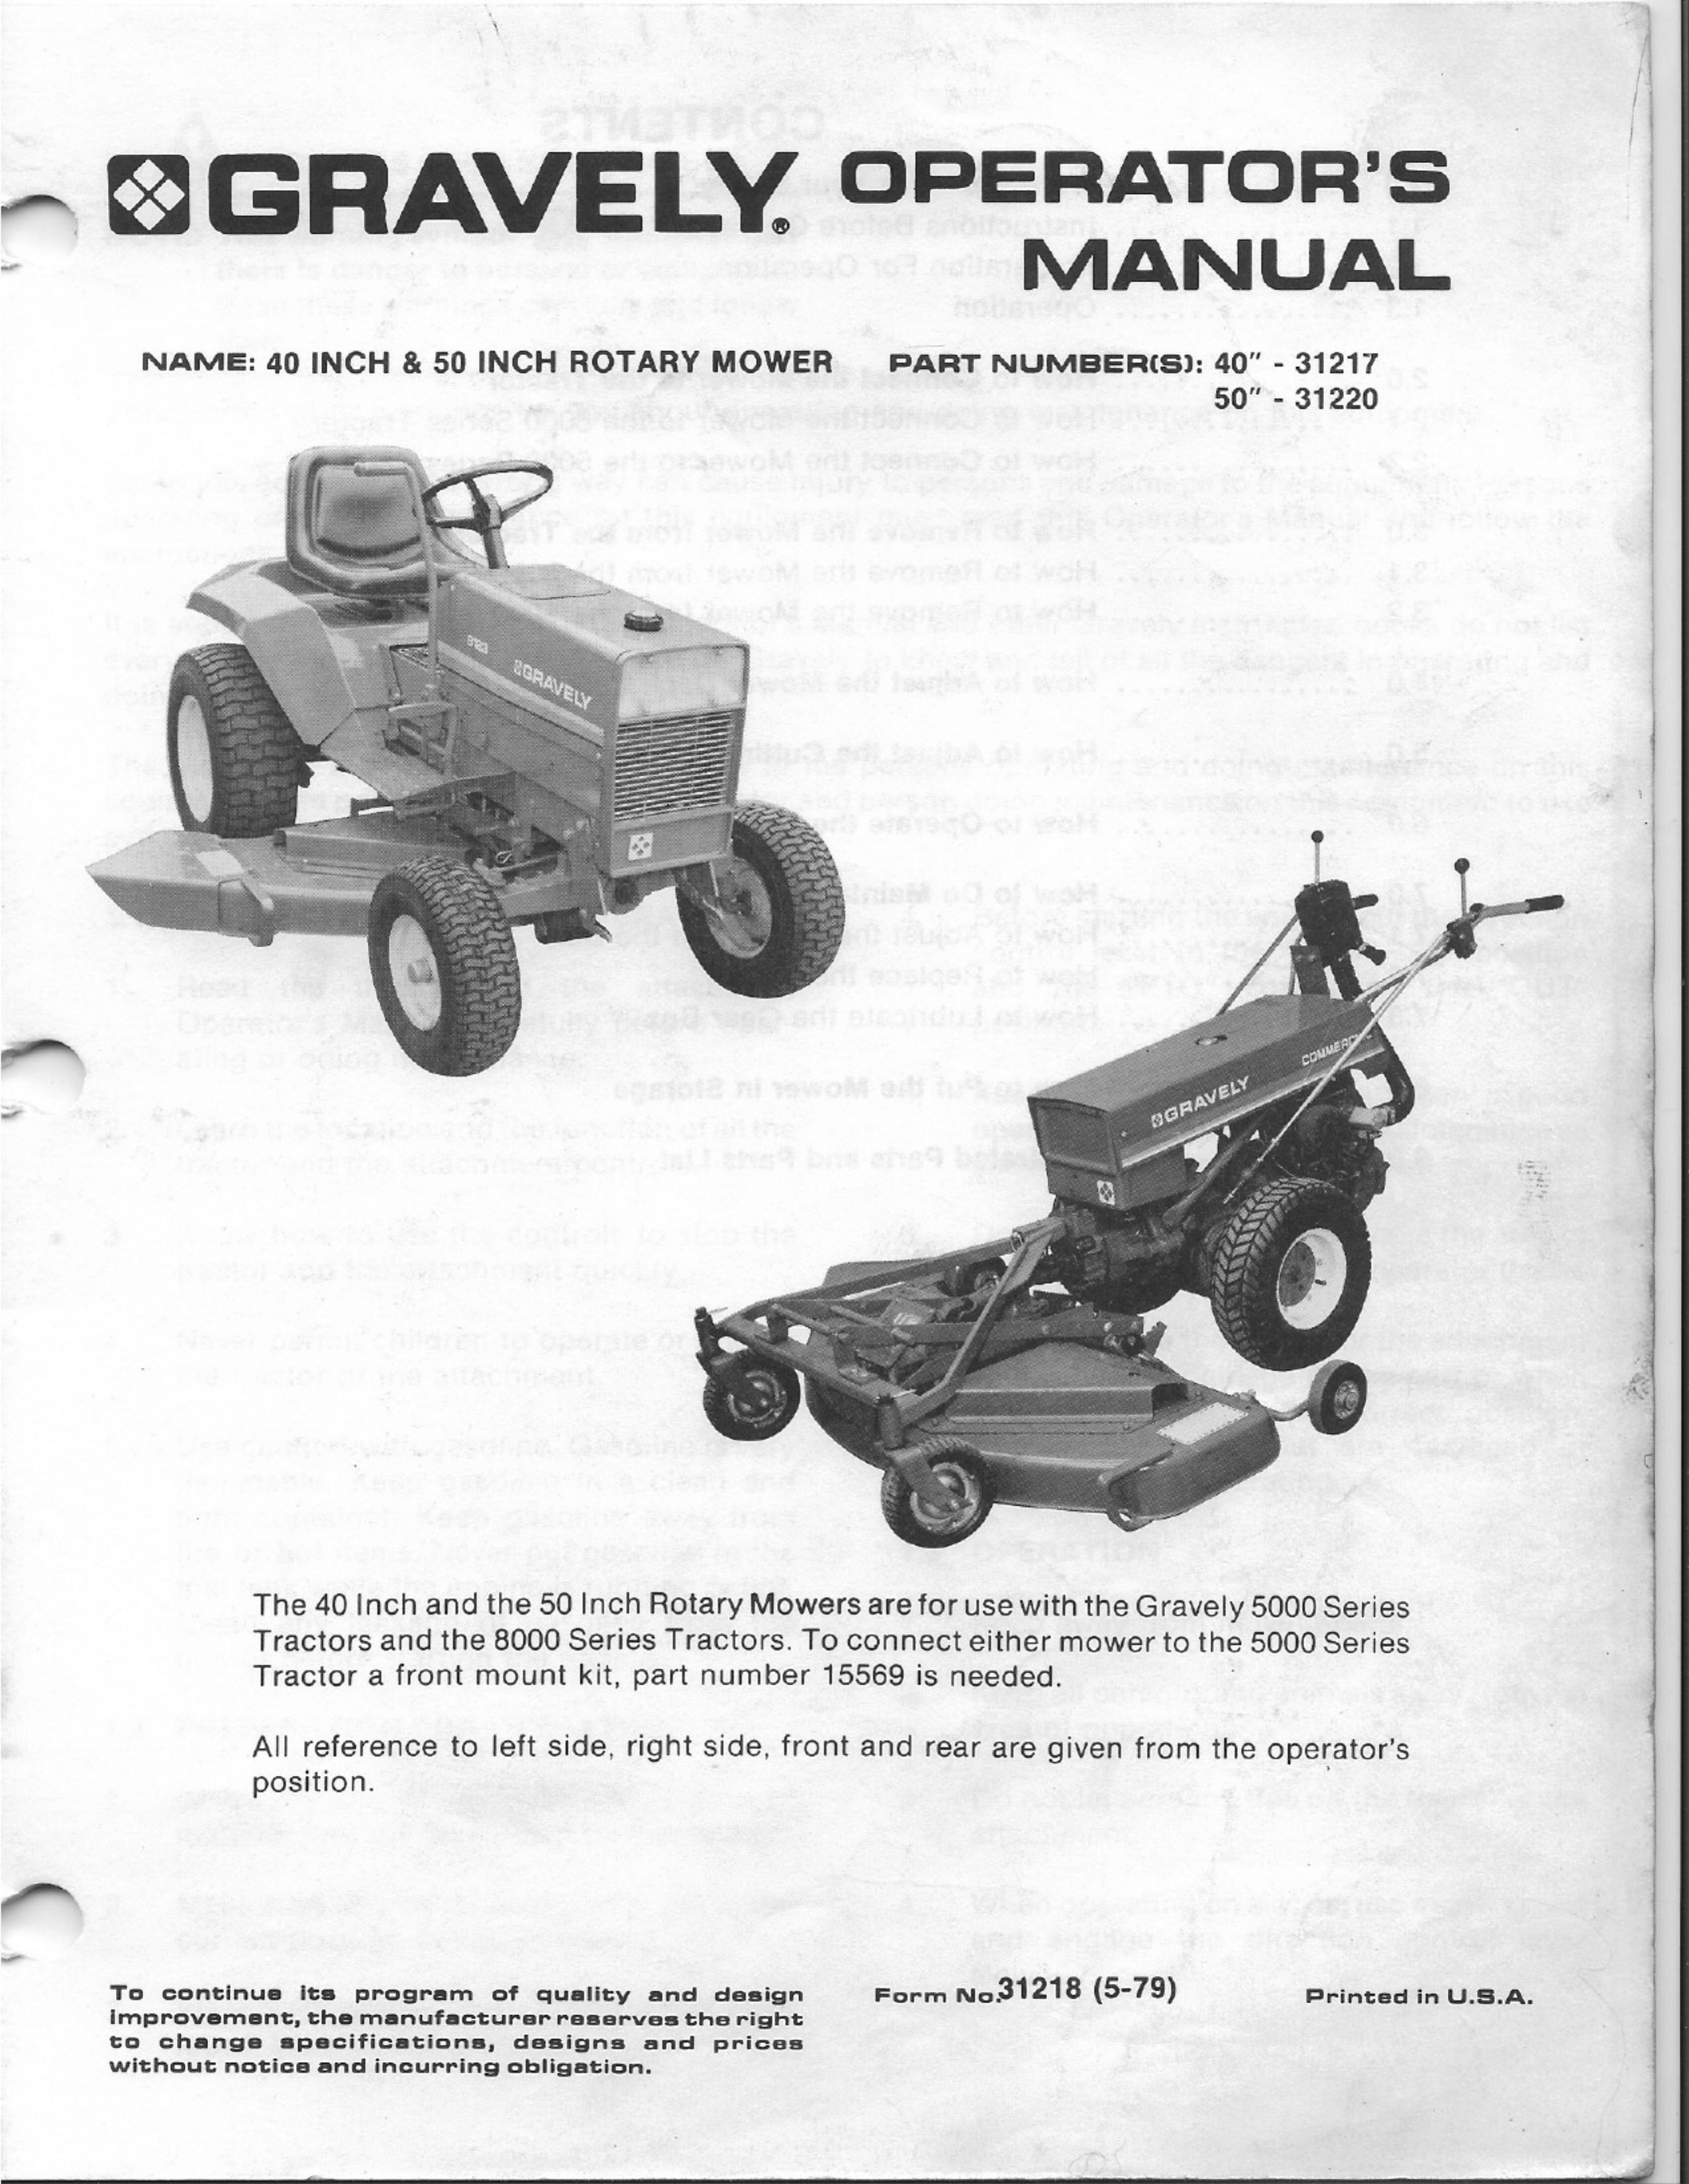 Gravely 31220 Lawn Mower User Manual